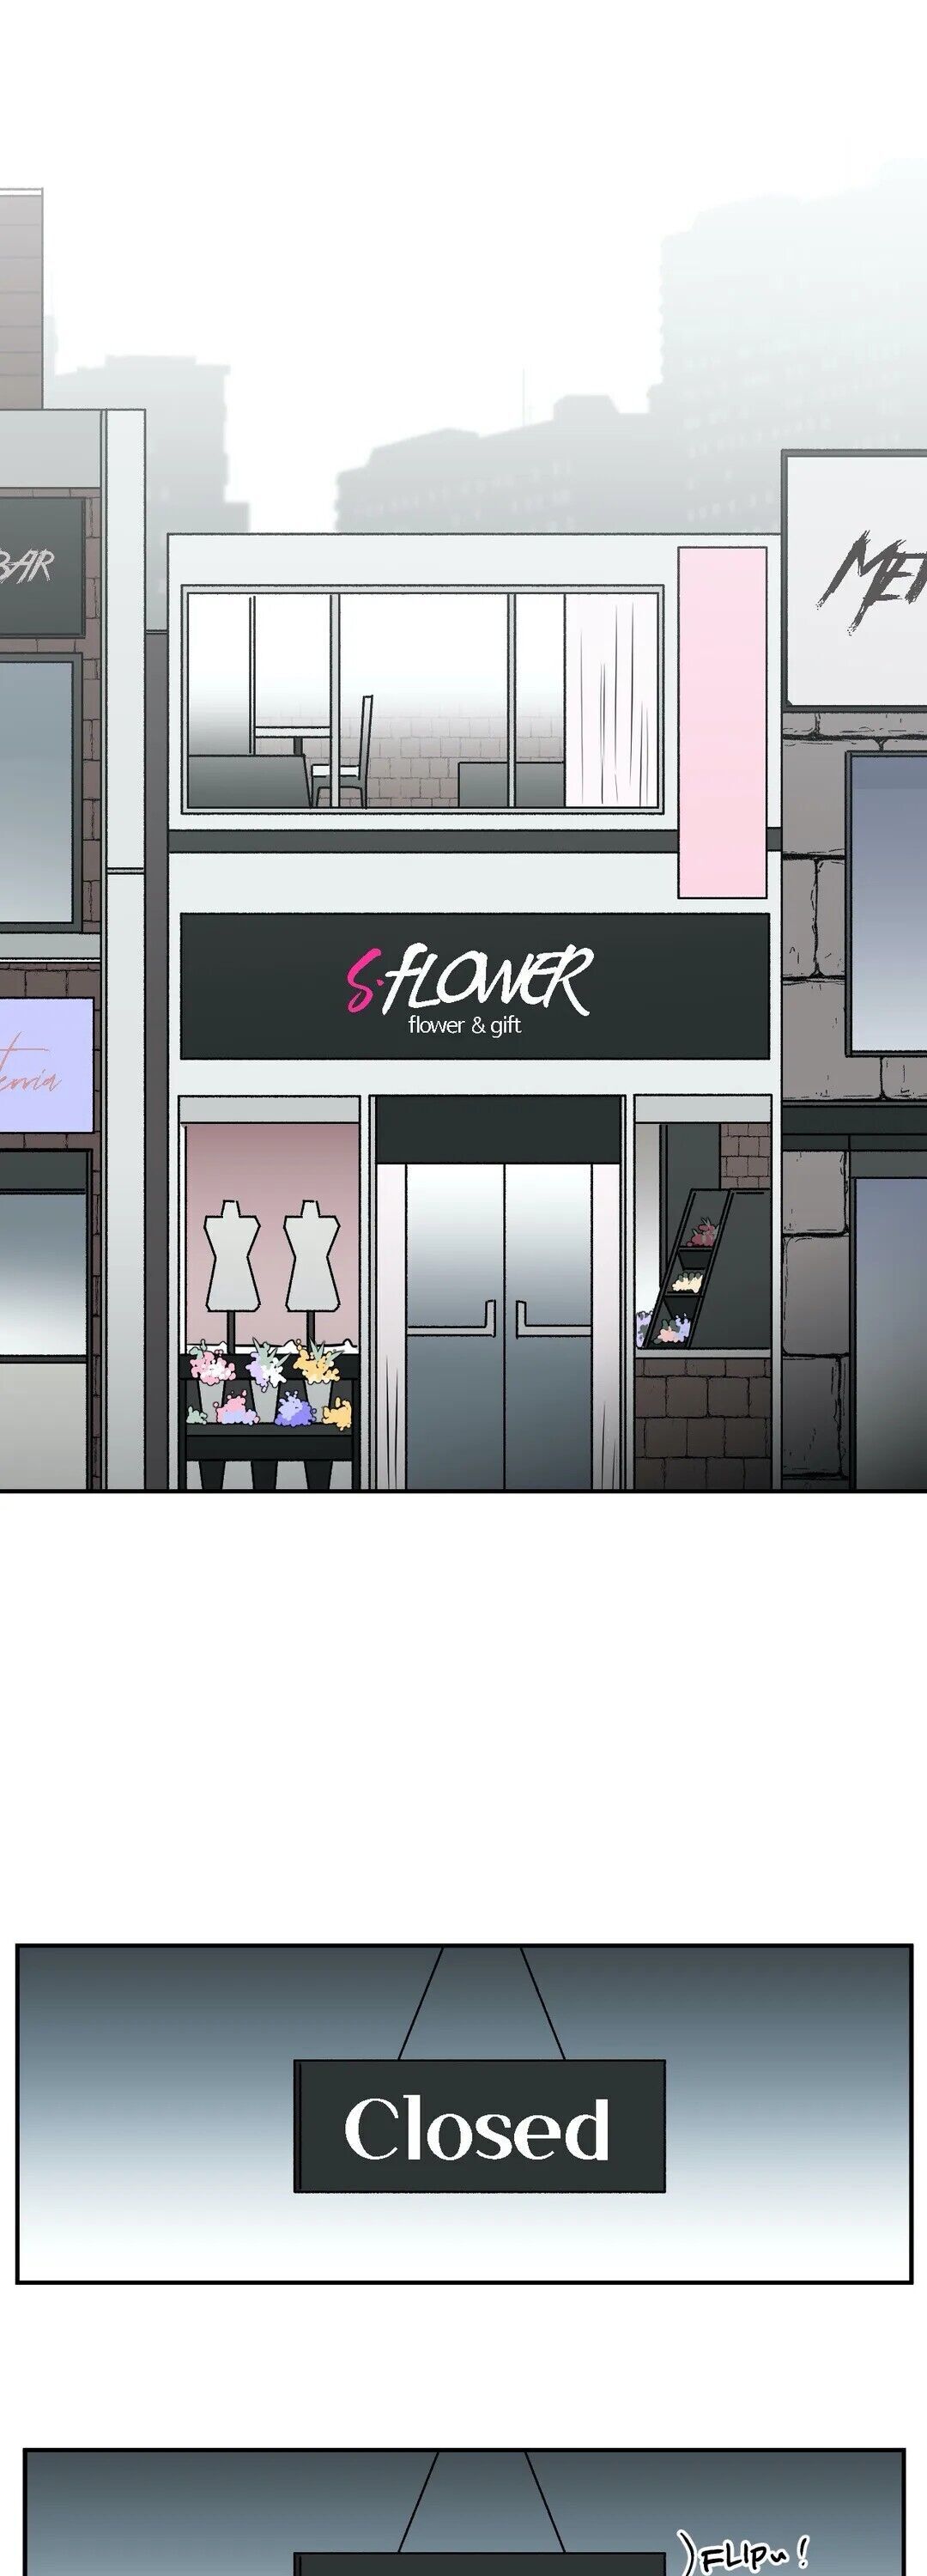 S Flower image